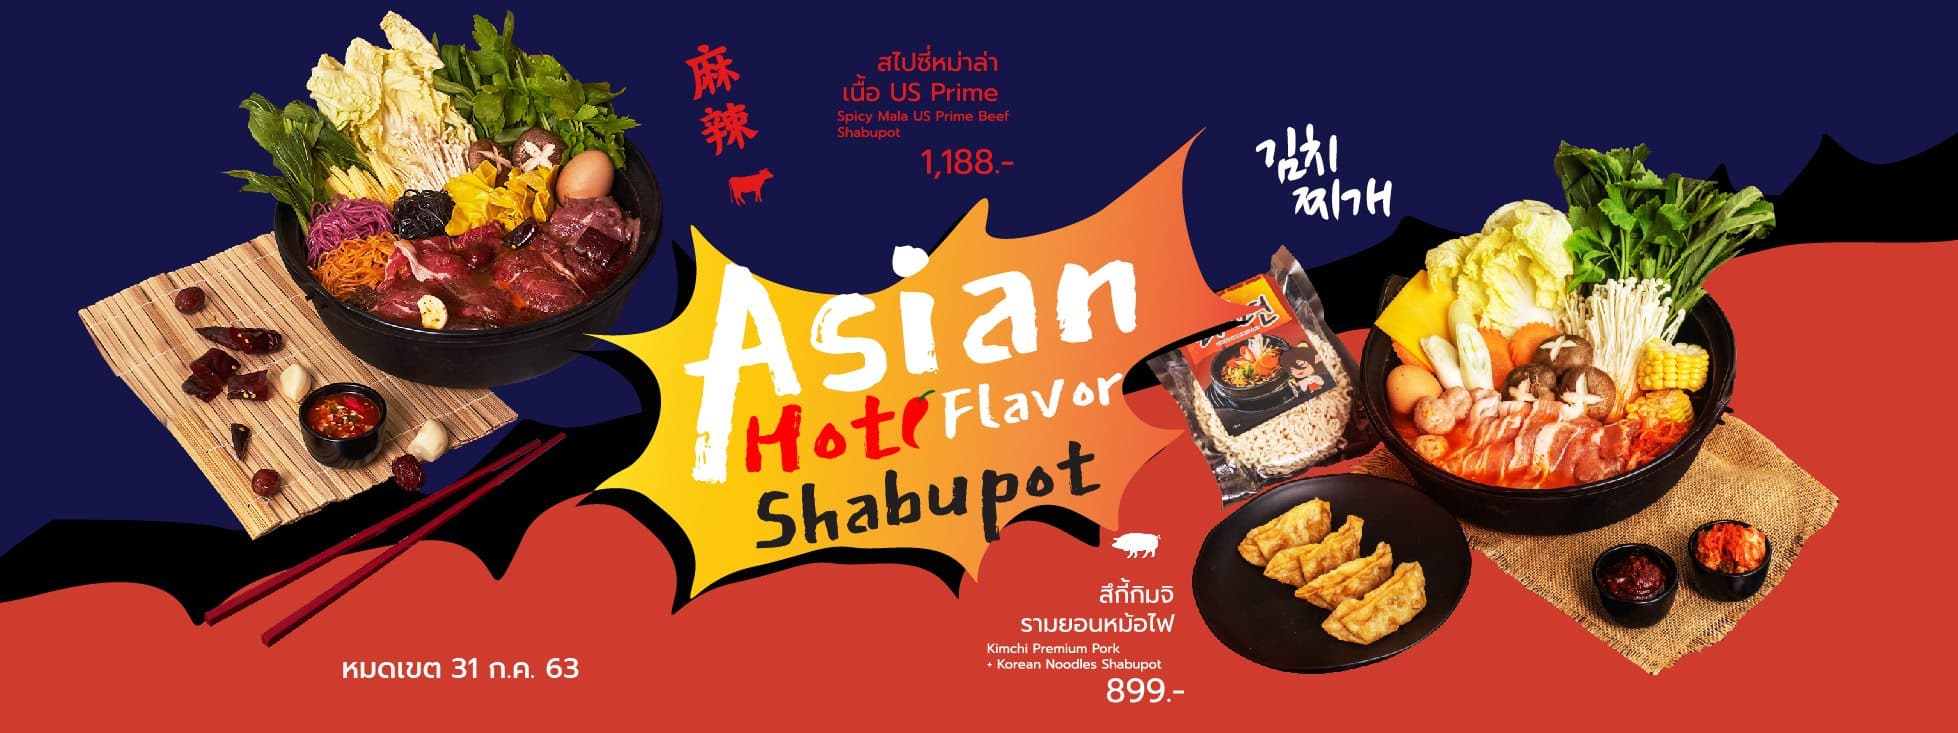 review coca restaurant asian hot flavor shabu pot promotion